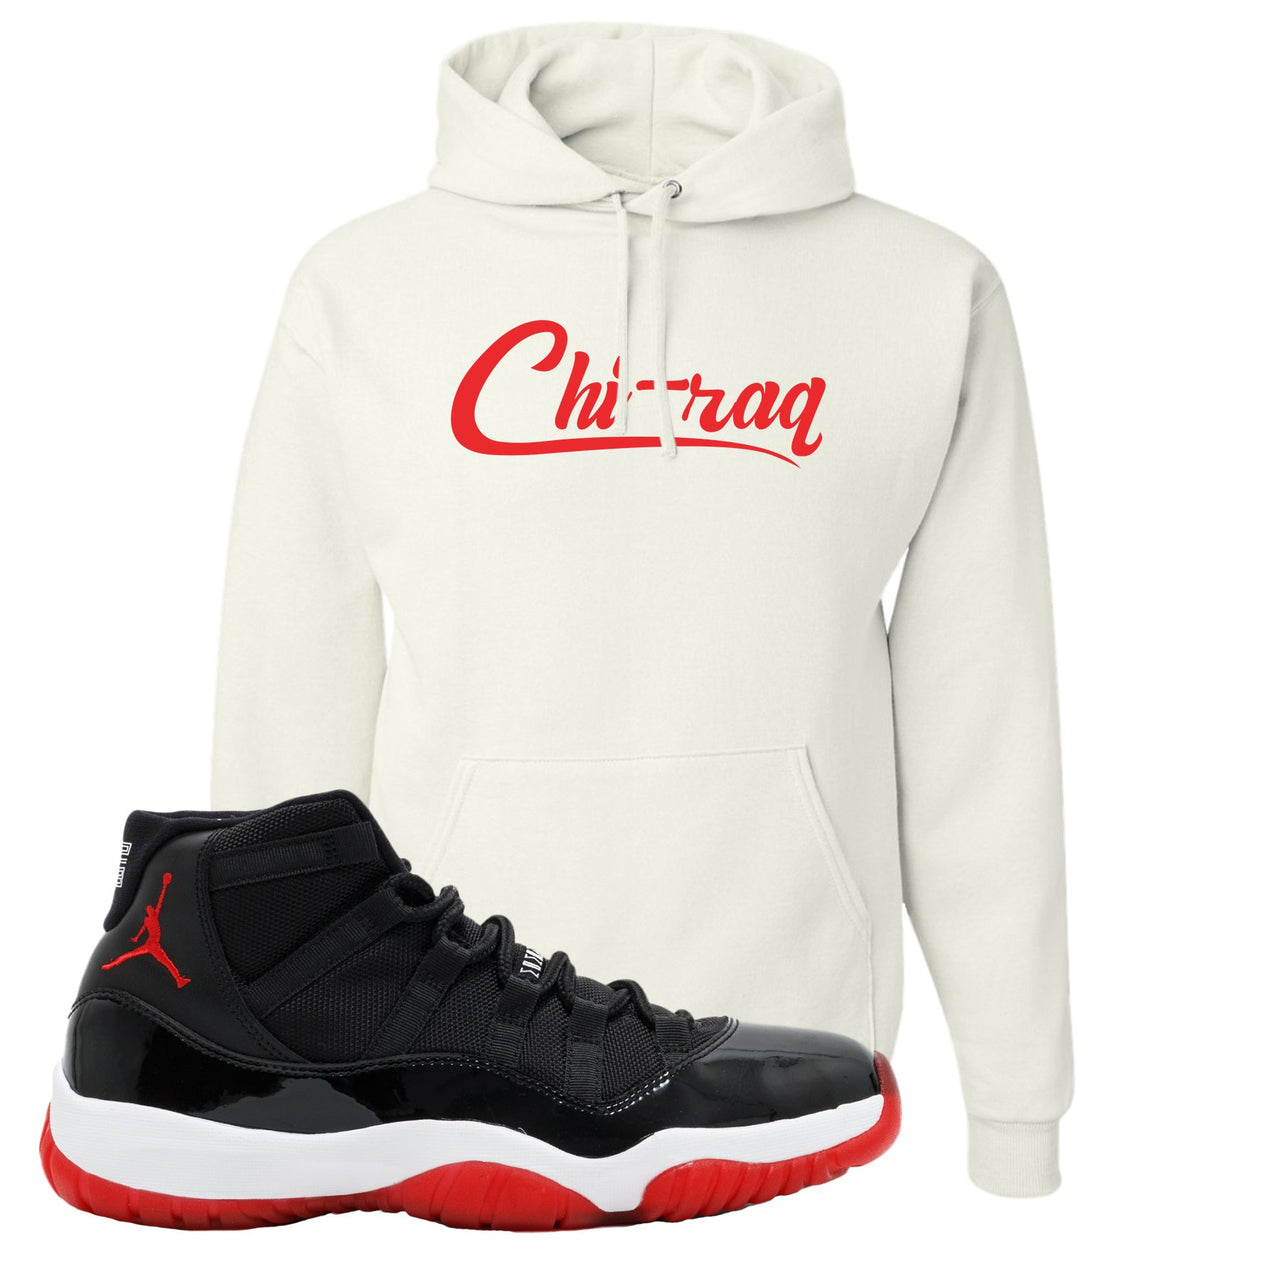 Jordan 11 Bred Chi-raq White Sneaker Hook Up Pullover Hoodie